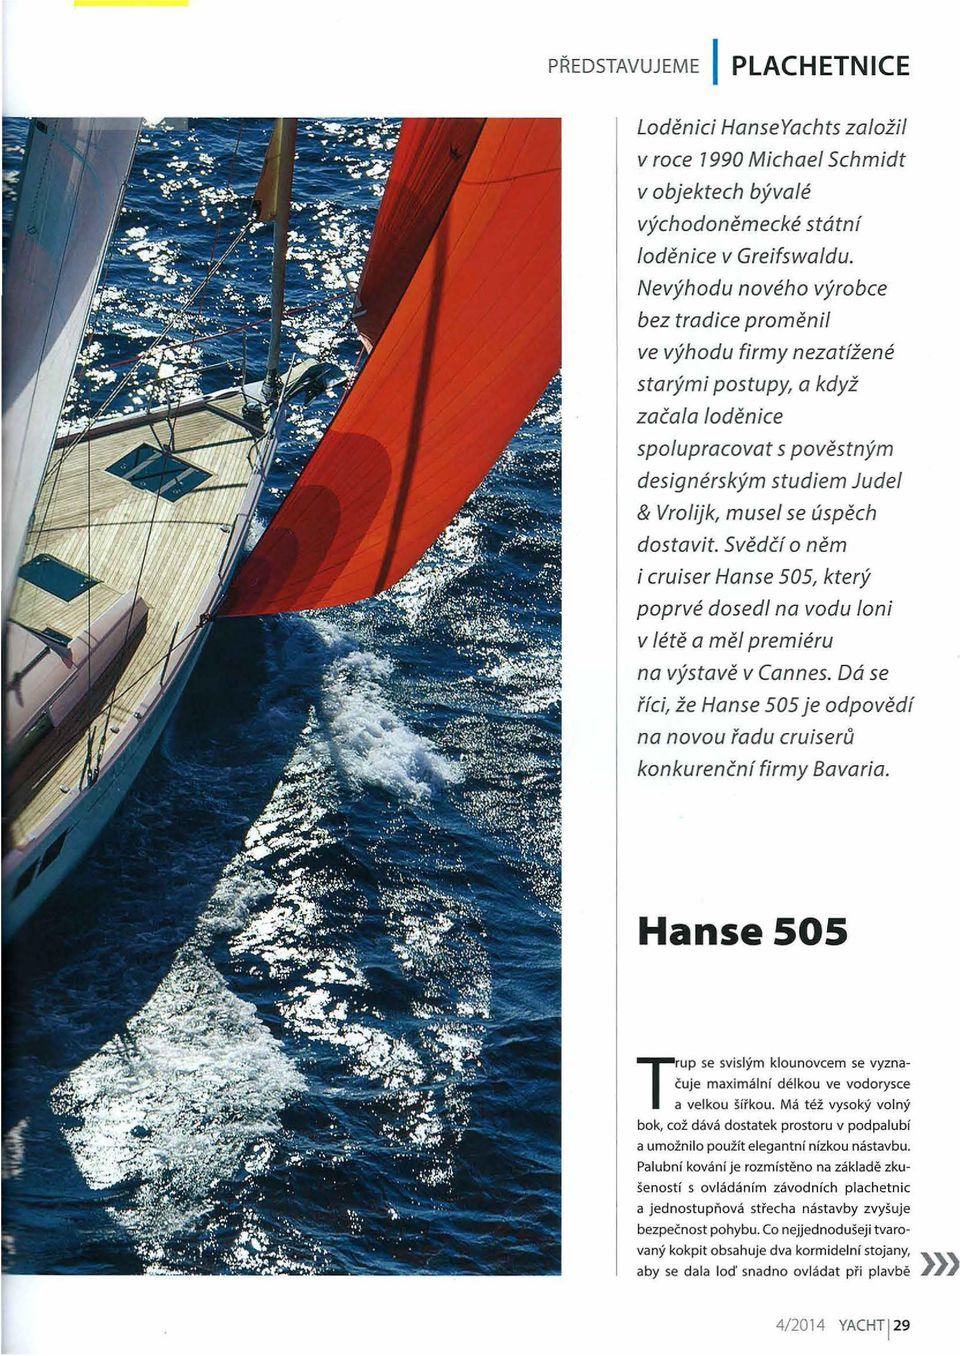 dostavit. SvedCf o nem i cruiser Hanse 505, ktery poprve dosedl na vodu loni V fete a mef premieru na vystave v Cannes.